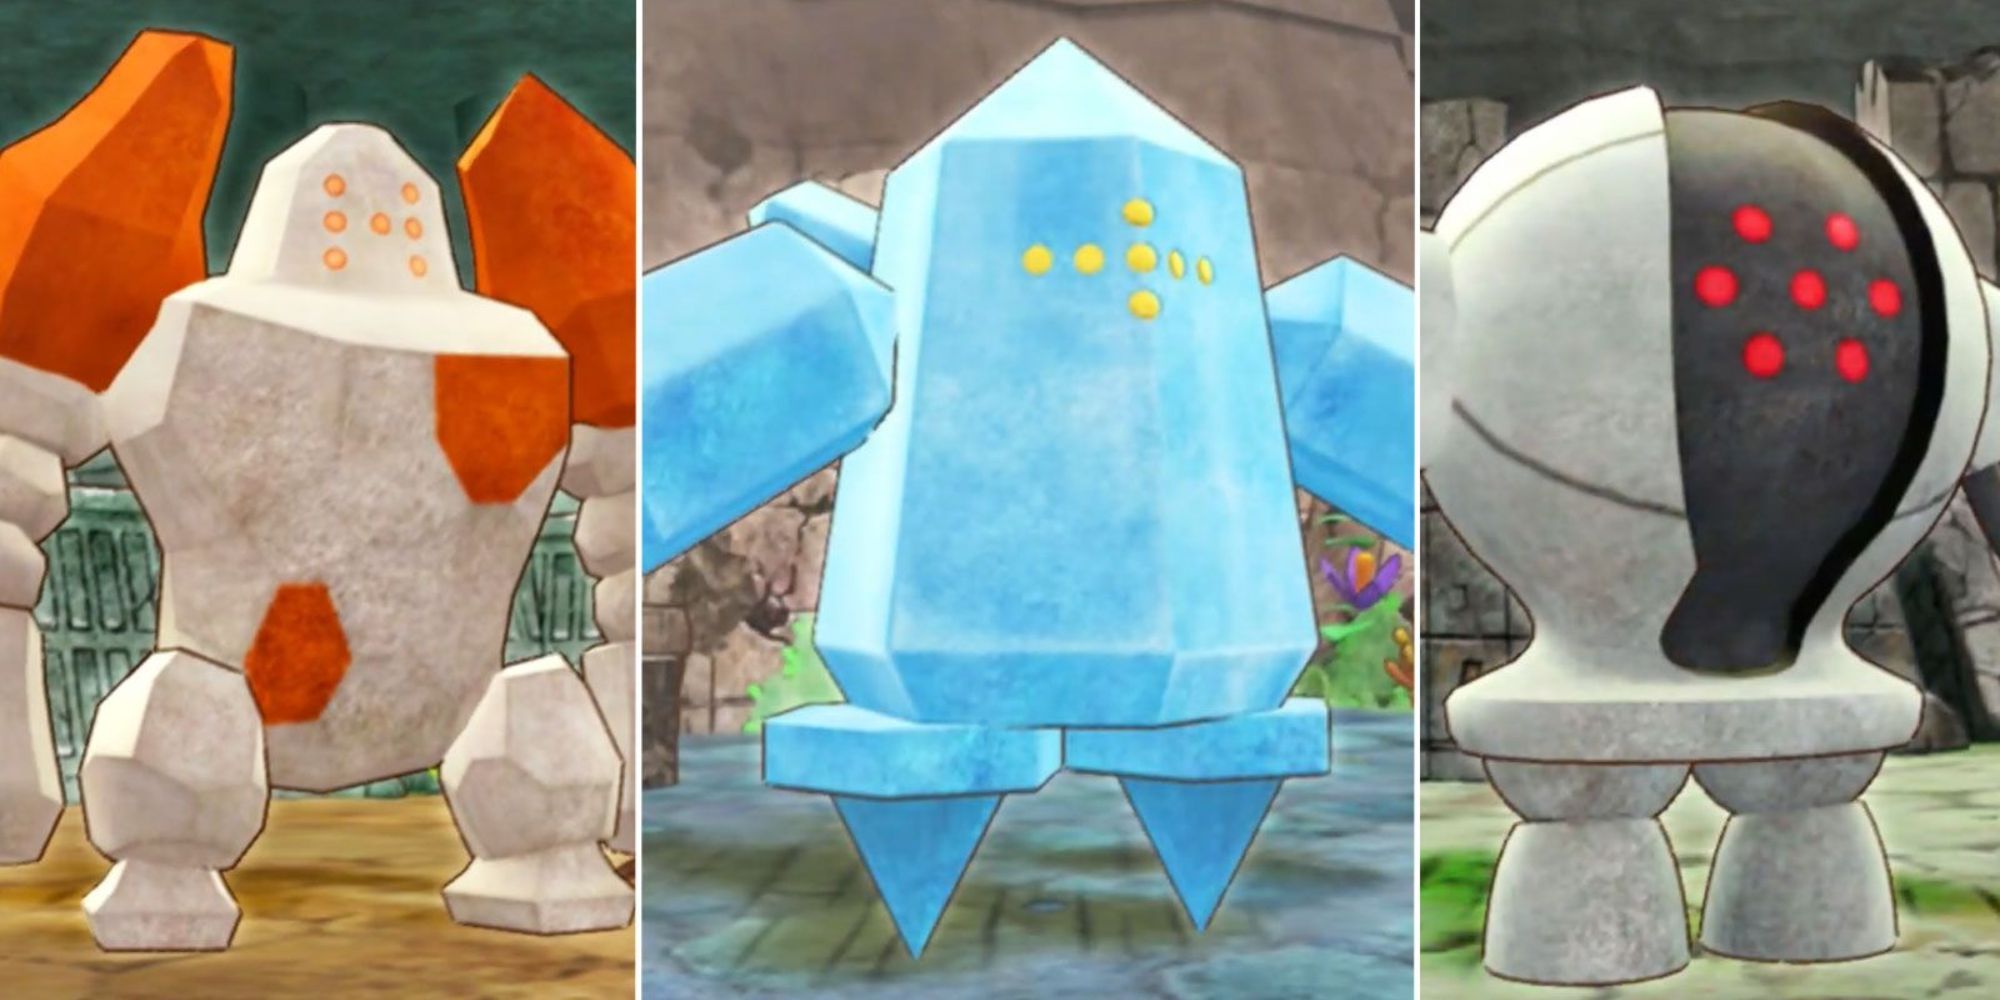 Three different Regis Pokemon